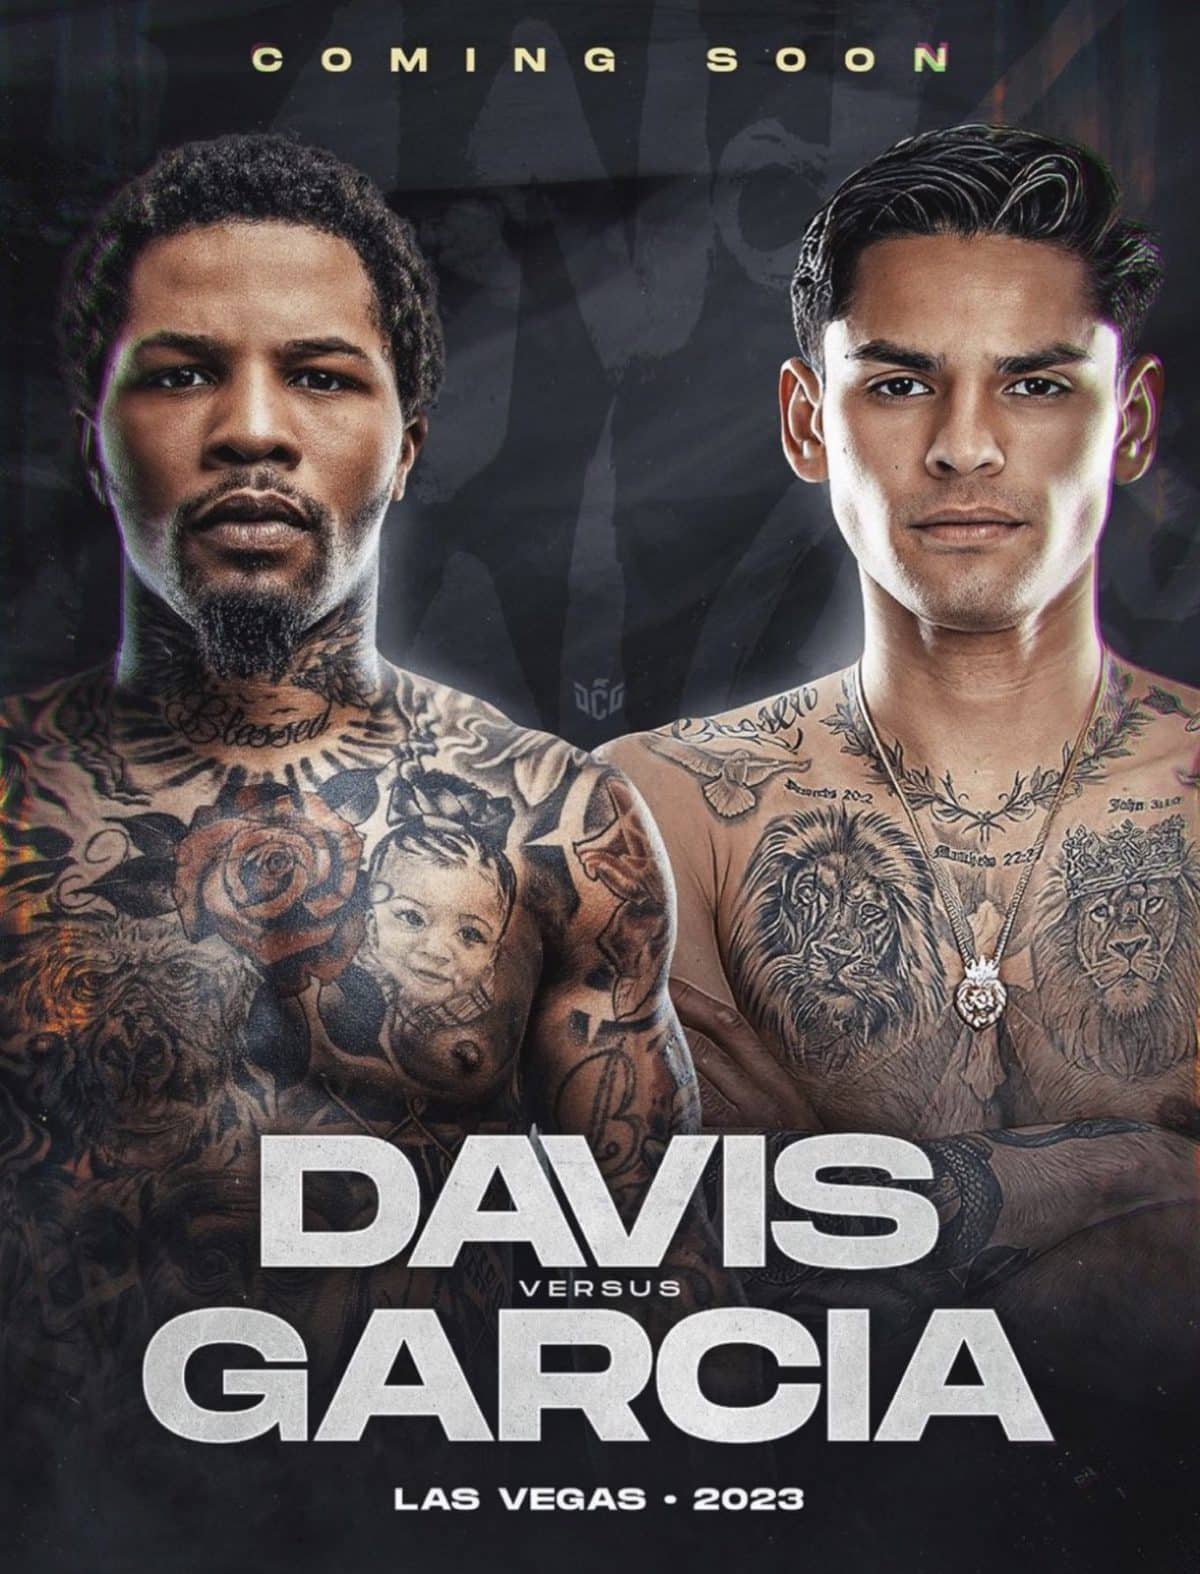 Image: Canelo Alvarez picks Gervonta Davis to defeat Ryan Garcia on April 15th